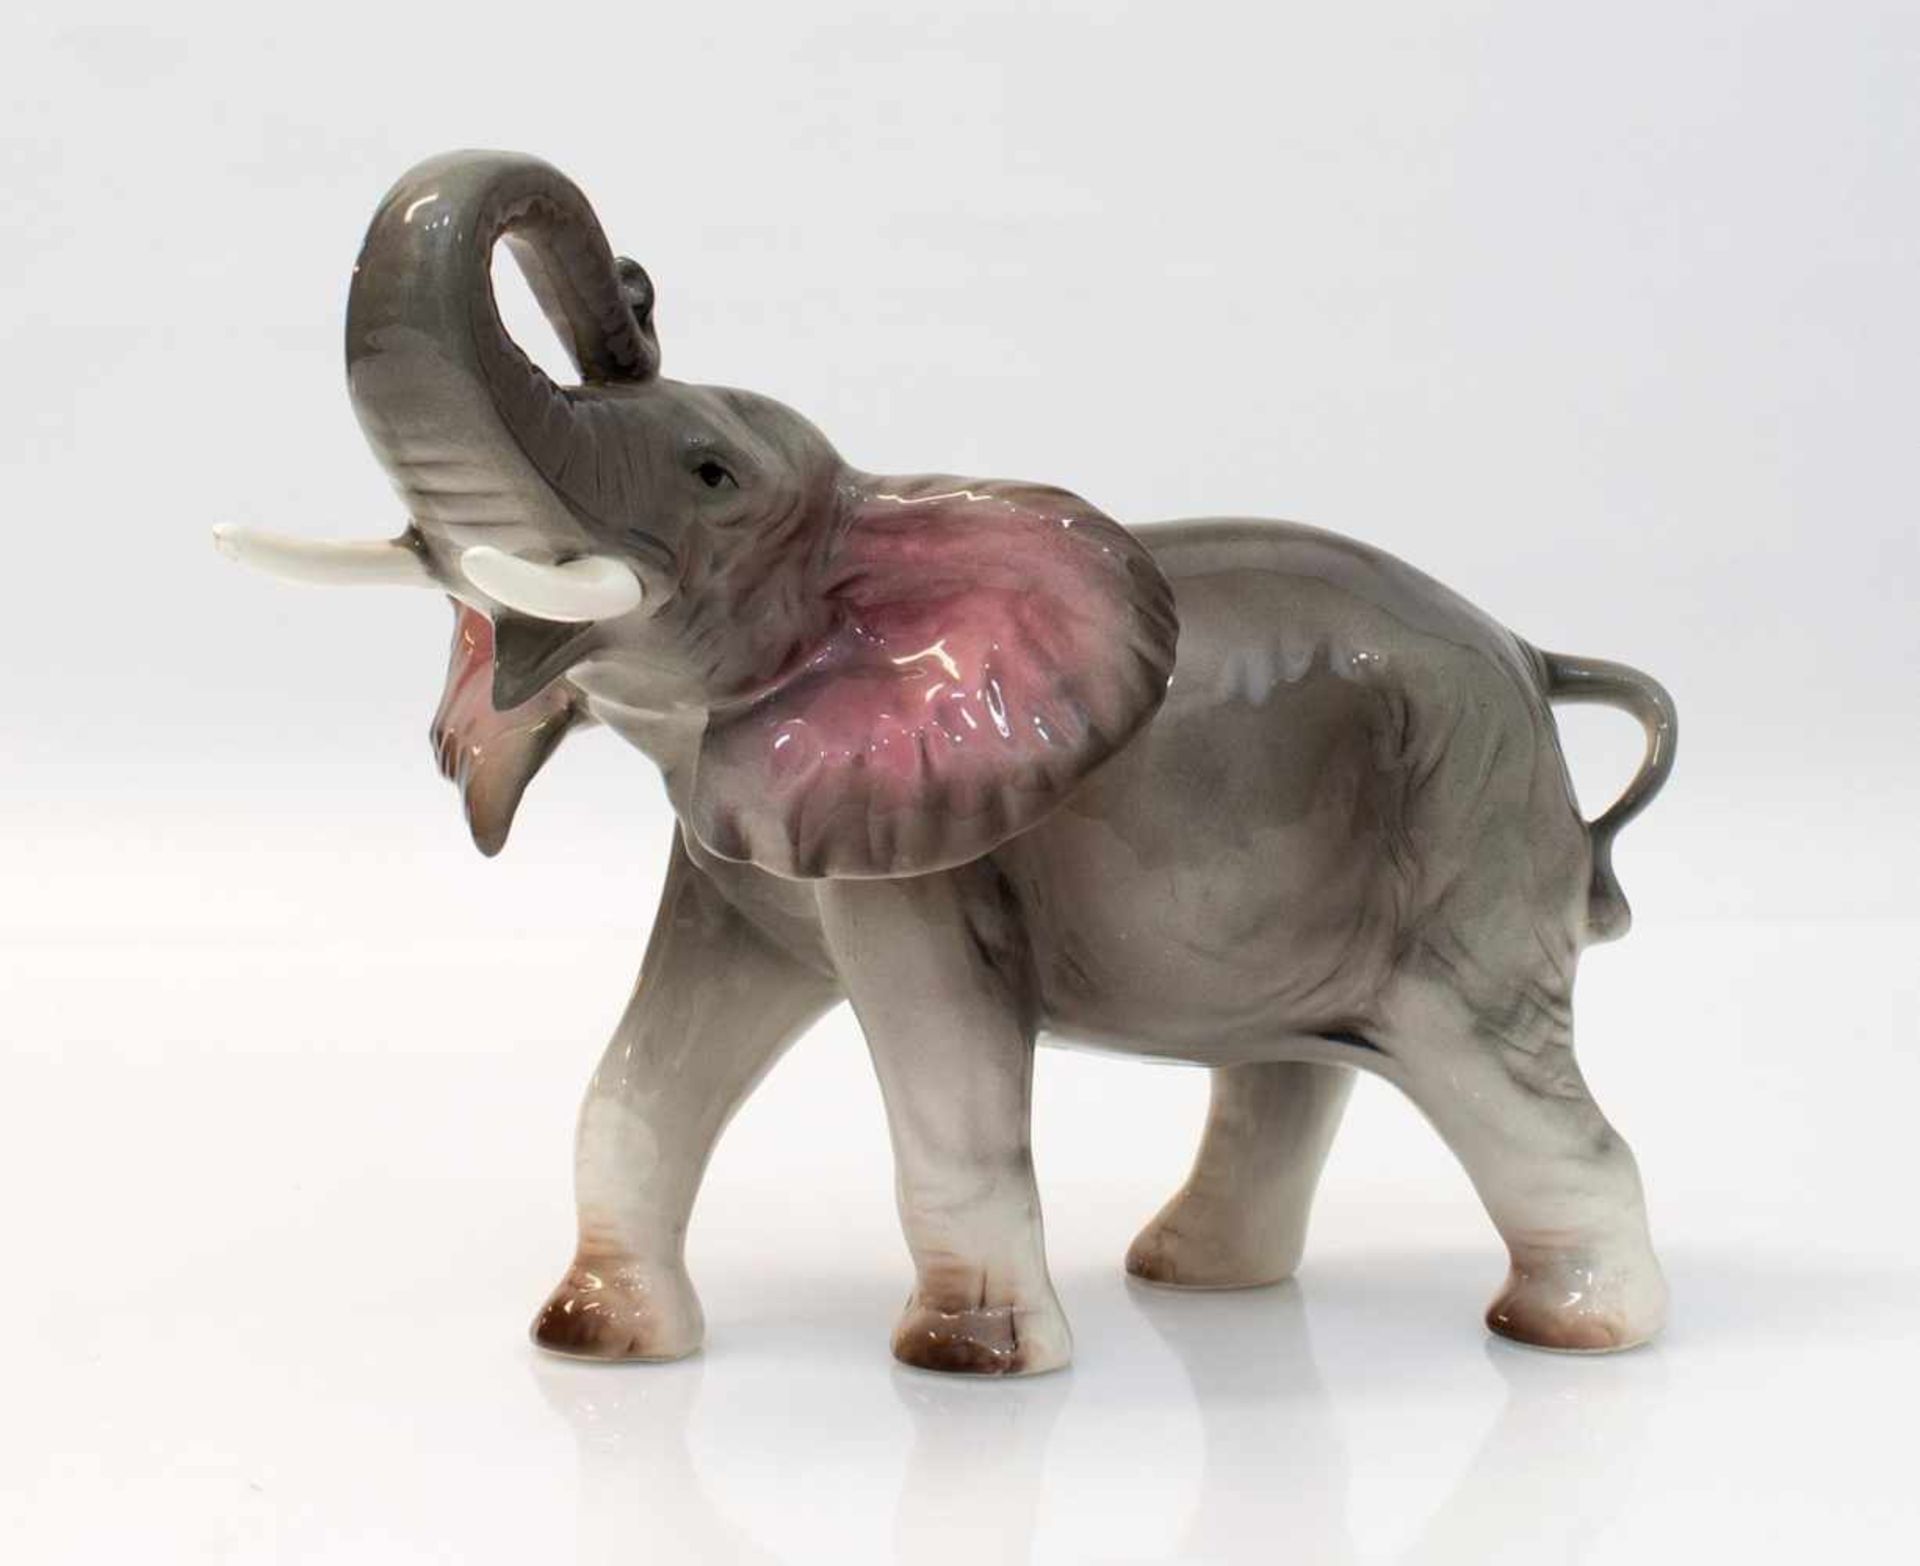 Elefantenbulle unbekannte Porzellanmanufaktur, H. 17 cm